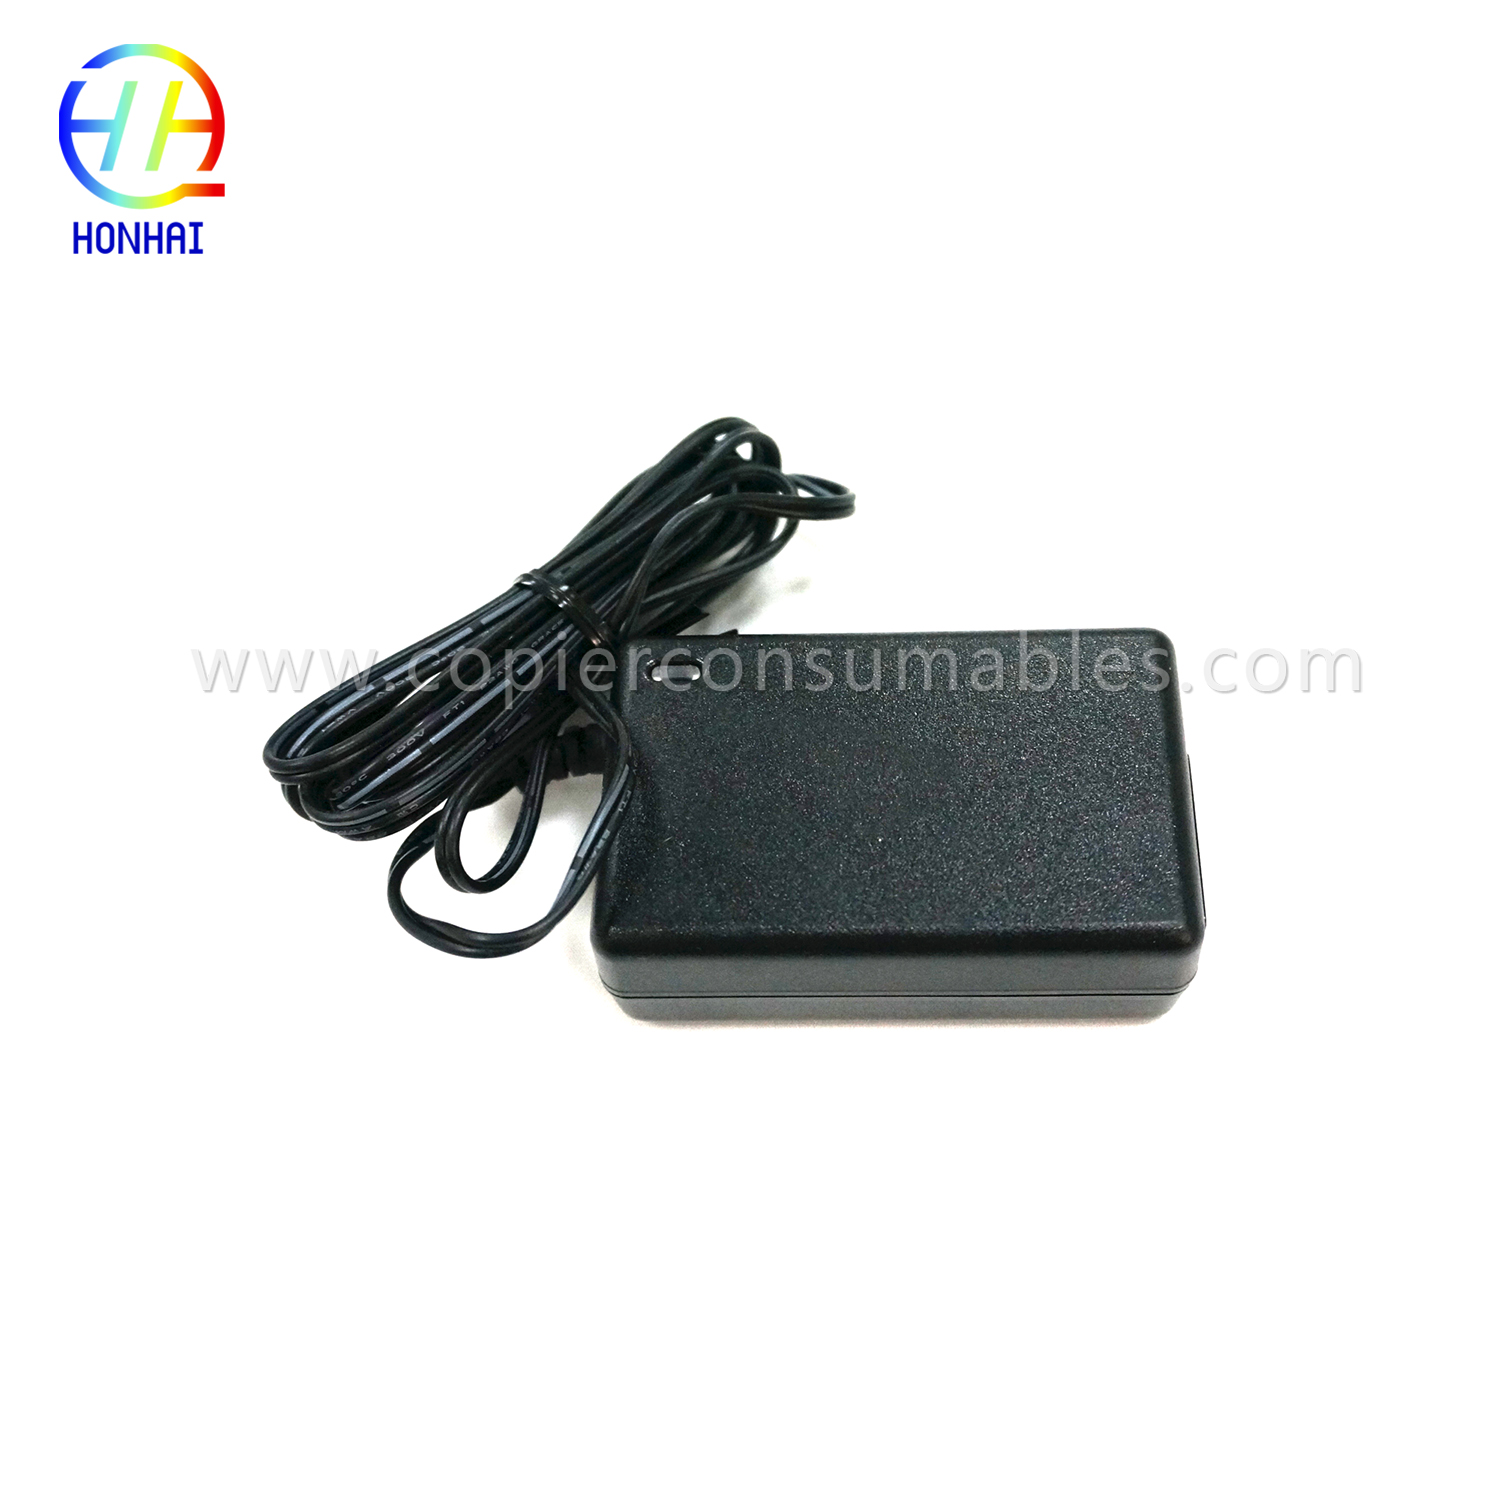 AC Power Adapter Charger HP Deskjet 1000 1050 2000 2050 2060 2010 0957-2286 30V 333mA (3) 拷贝